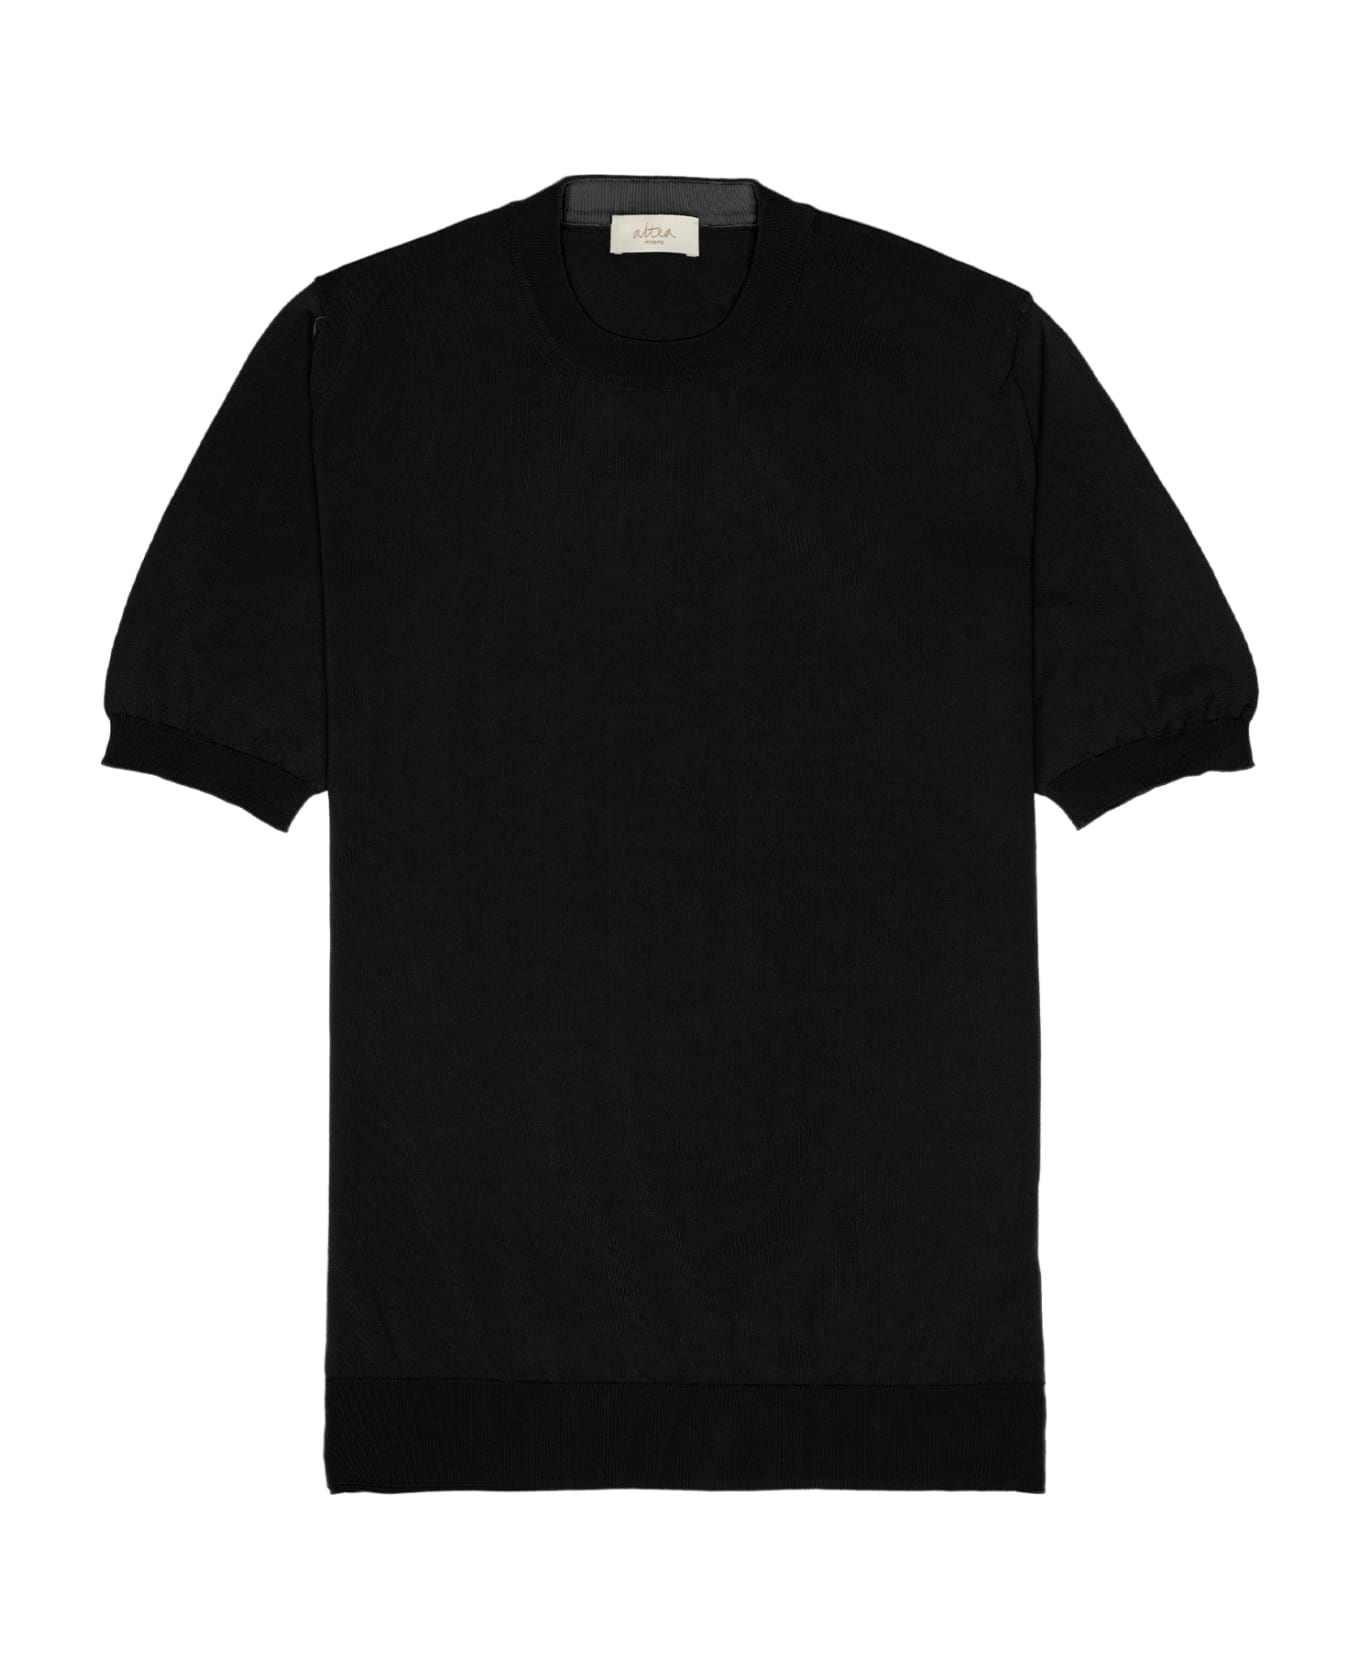 Altea Black Cotton T-shirt - NERO シャツ